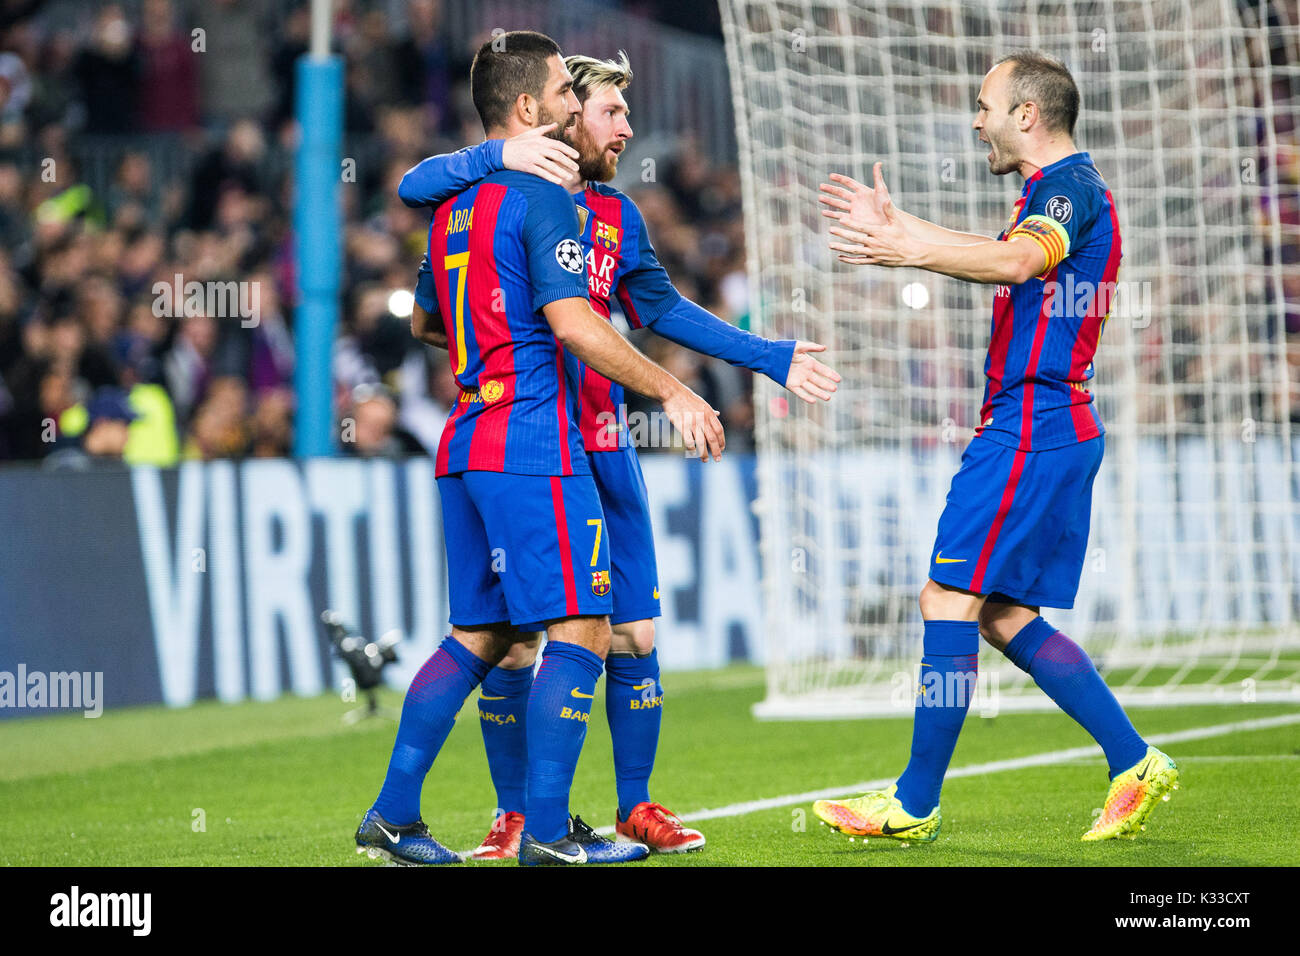 FC Barcelona news: Cruyff, Maradona and Messi in World Soccer all